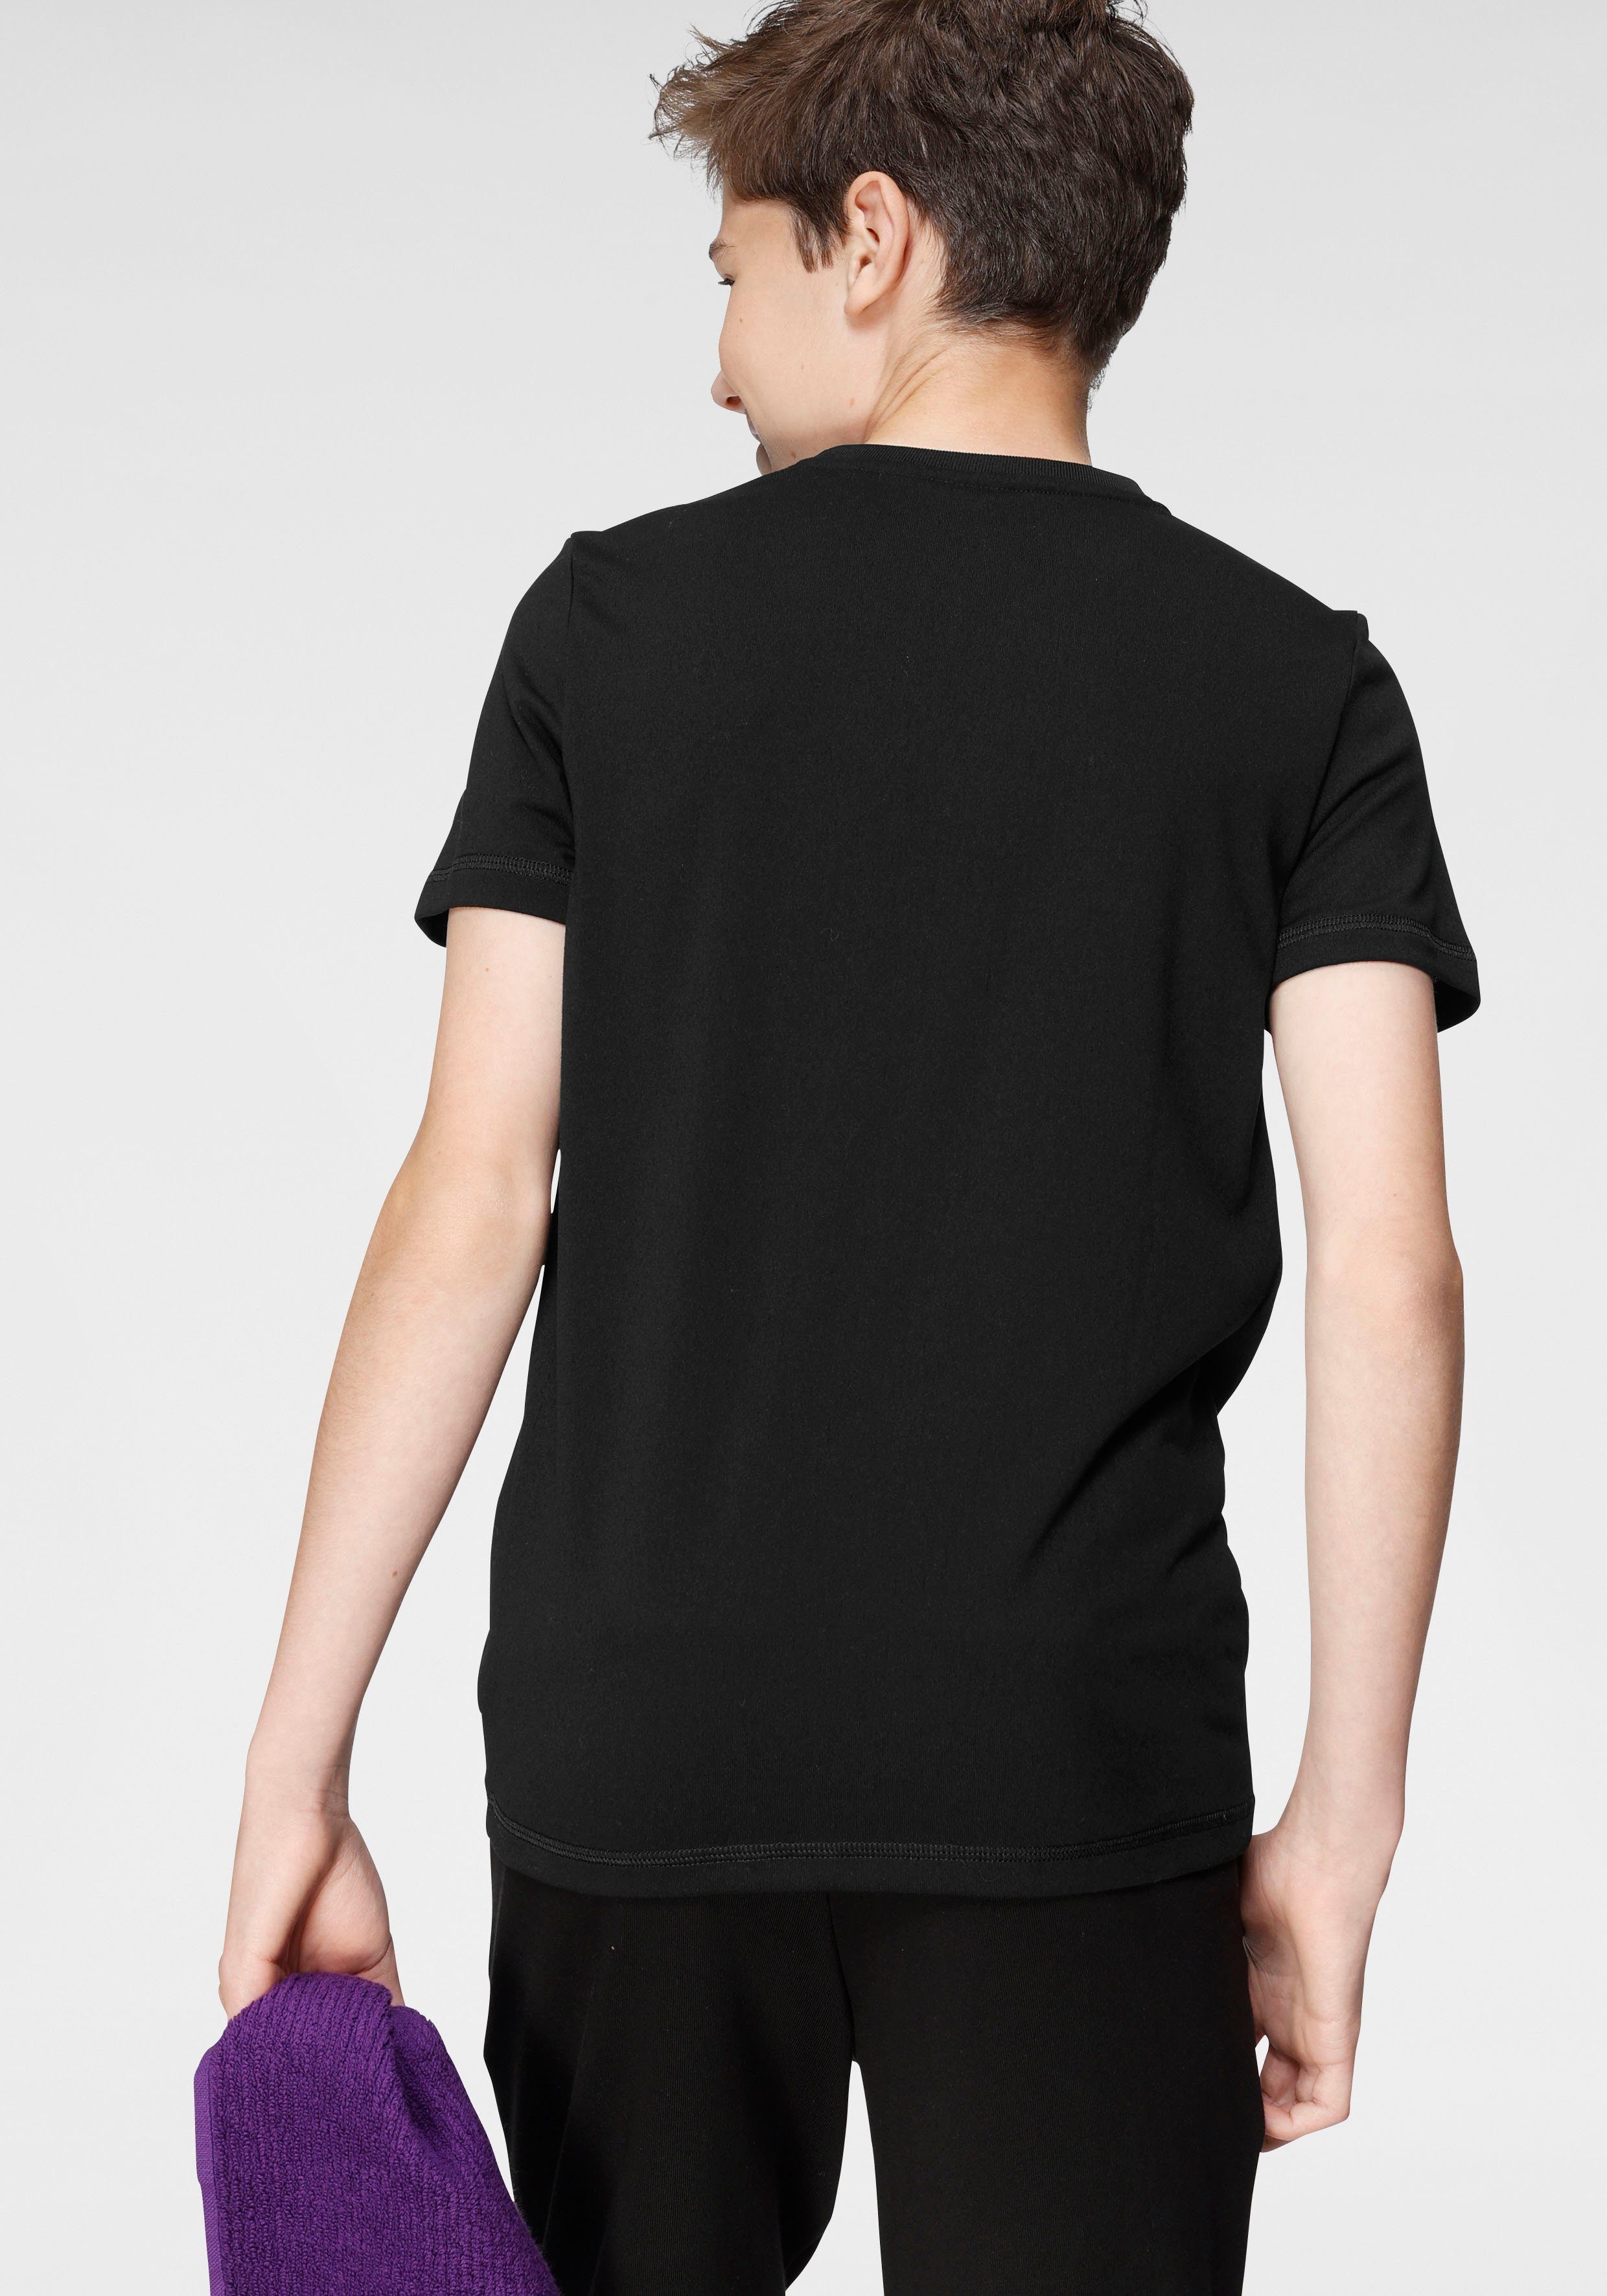 Puma SMALL LOGO TEE PUMA ACTIVE Black T-Shirt B